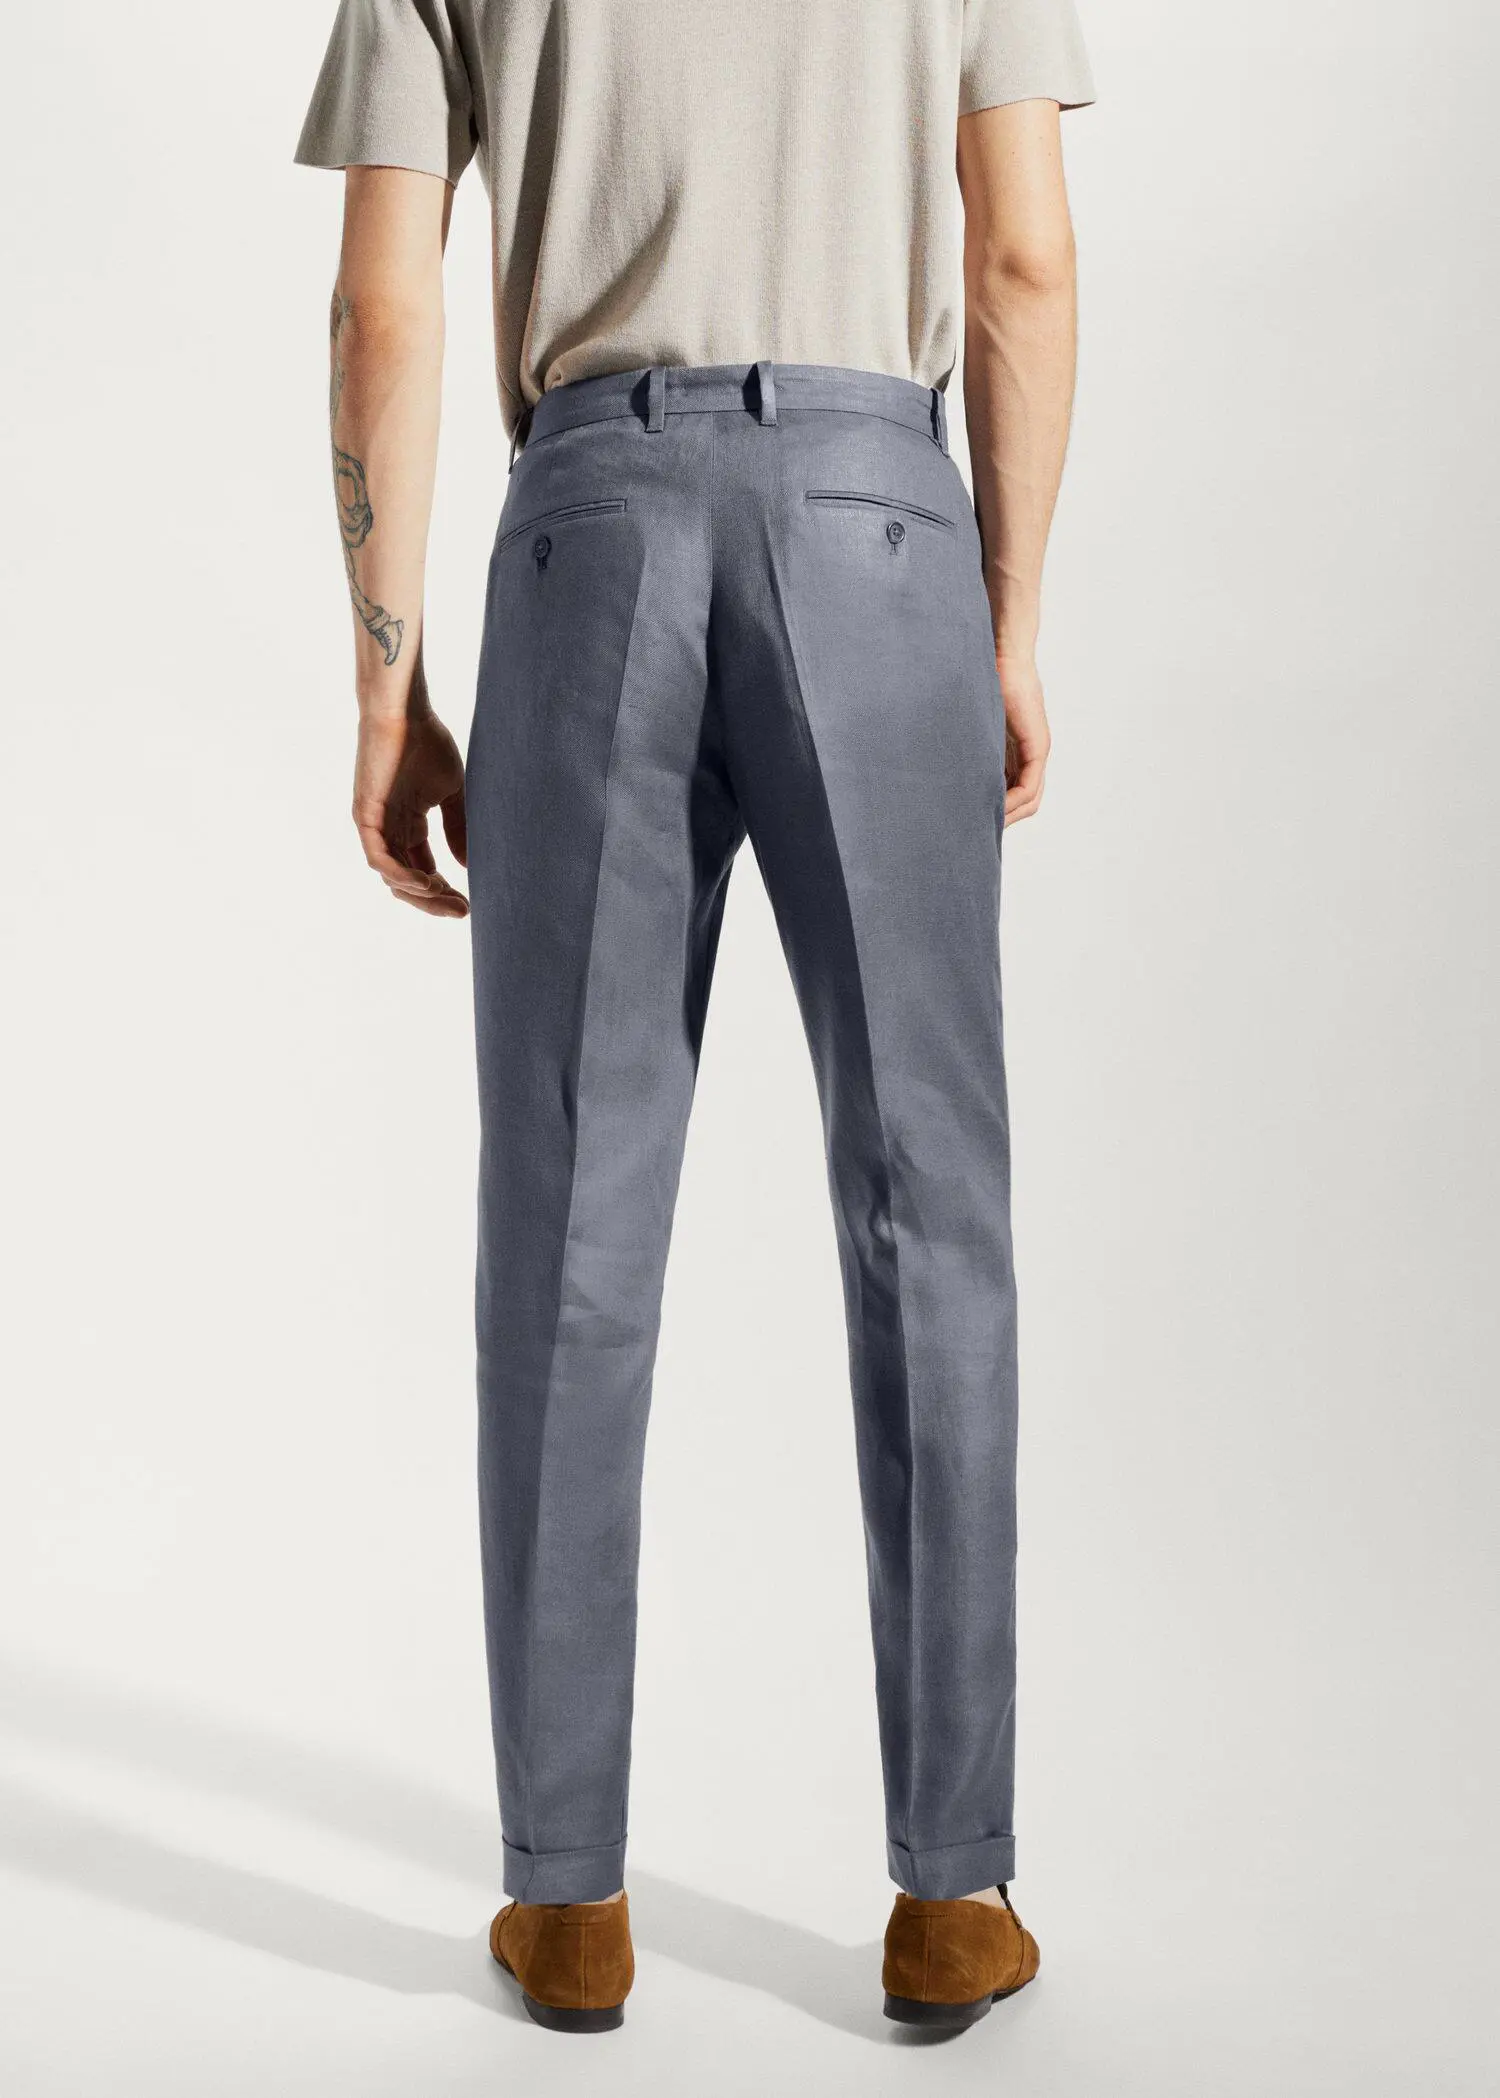 Mango 100% linen regular-fit pants. a man wearing a pair of gray pants. 